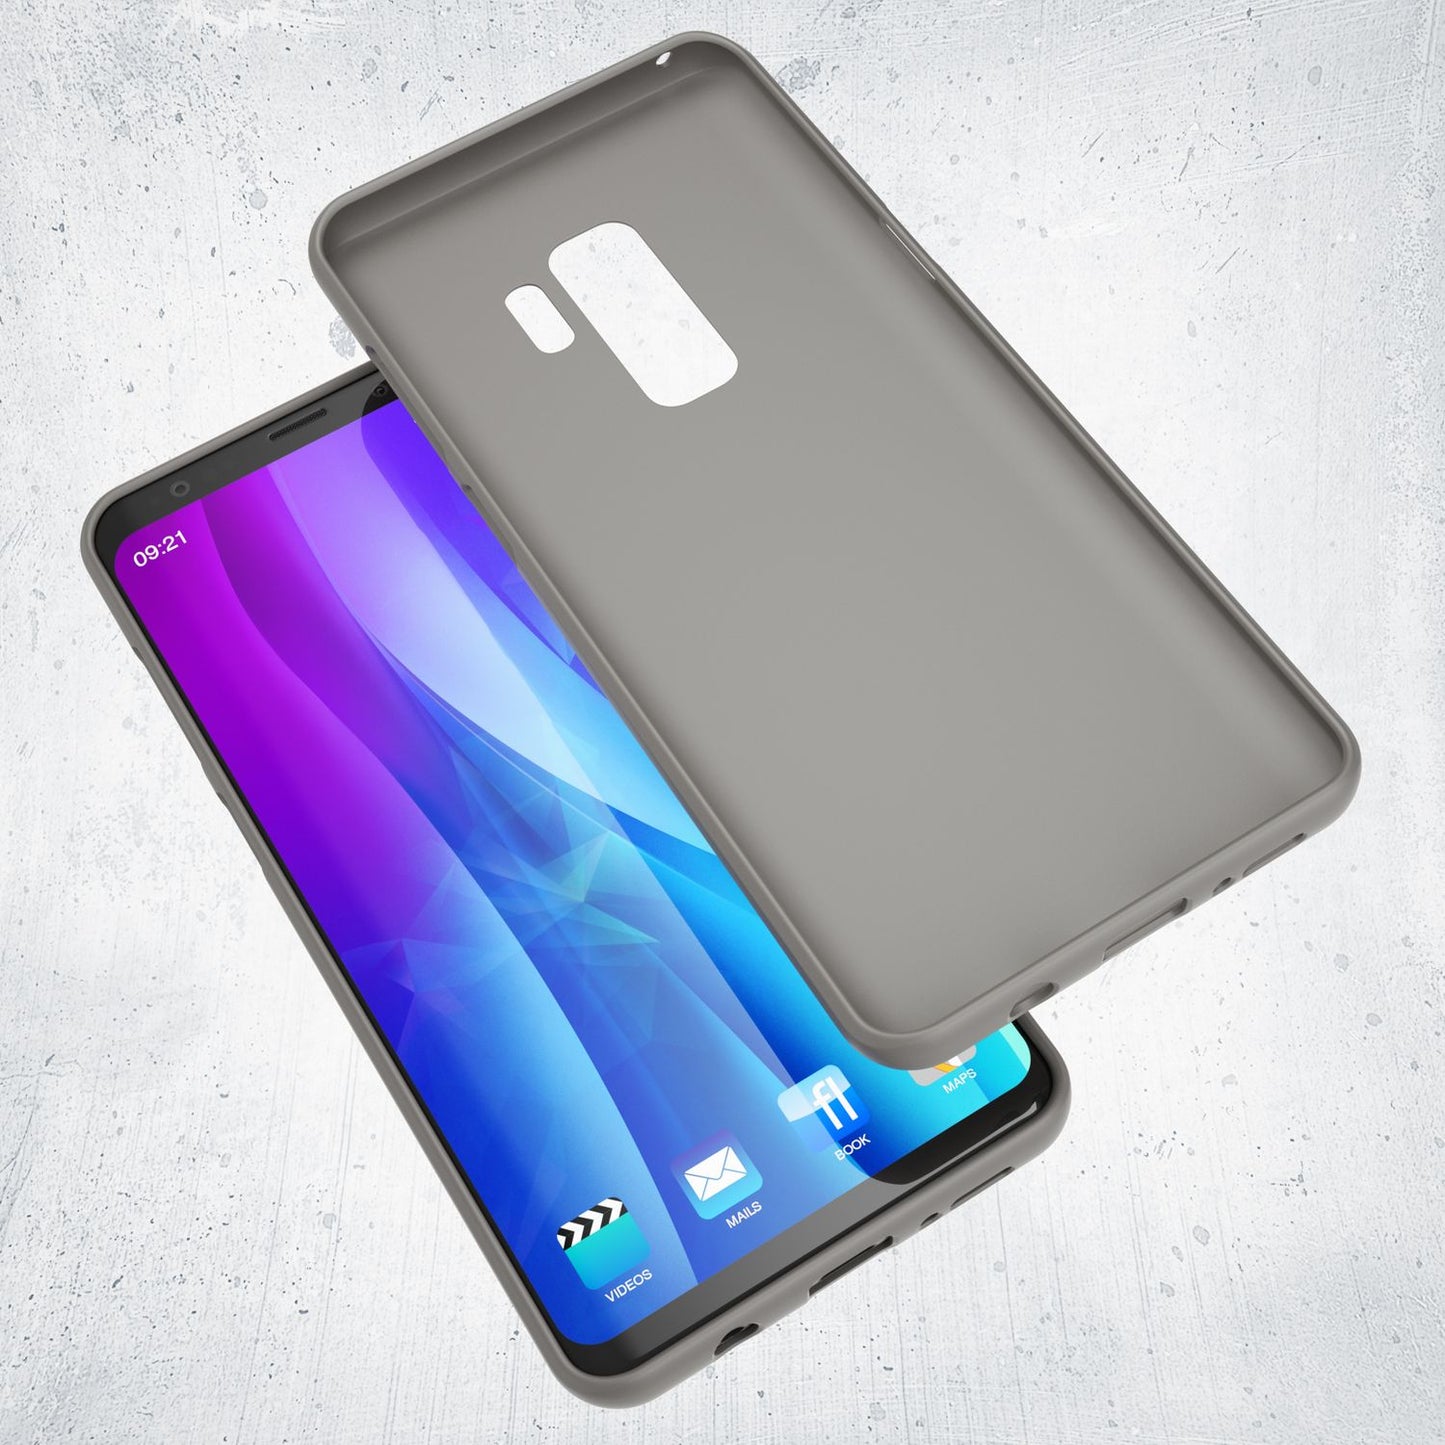 Samsung Galaxy S9 Plus Handy Hülle von NALIA, Ultra-Slim TPU Silikon Neon Case